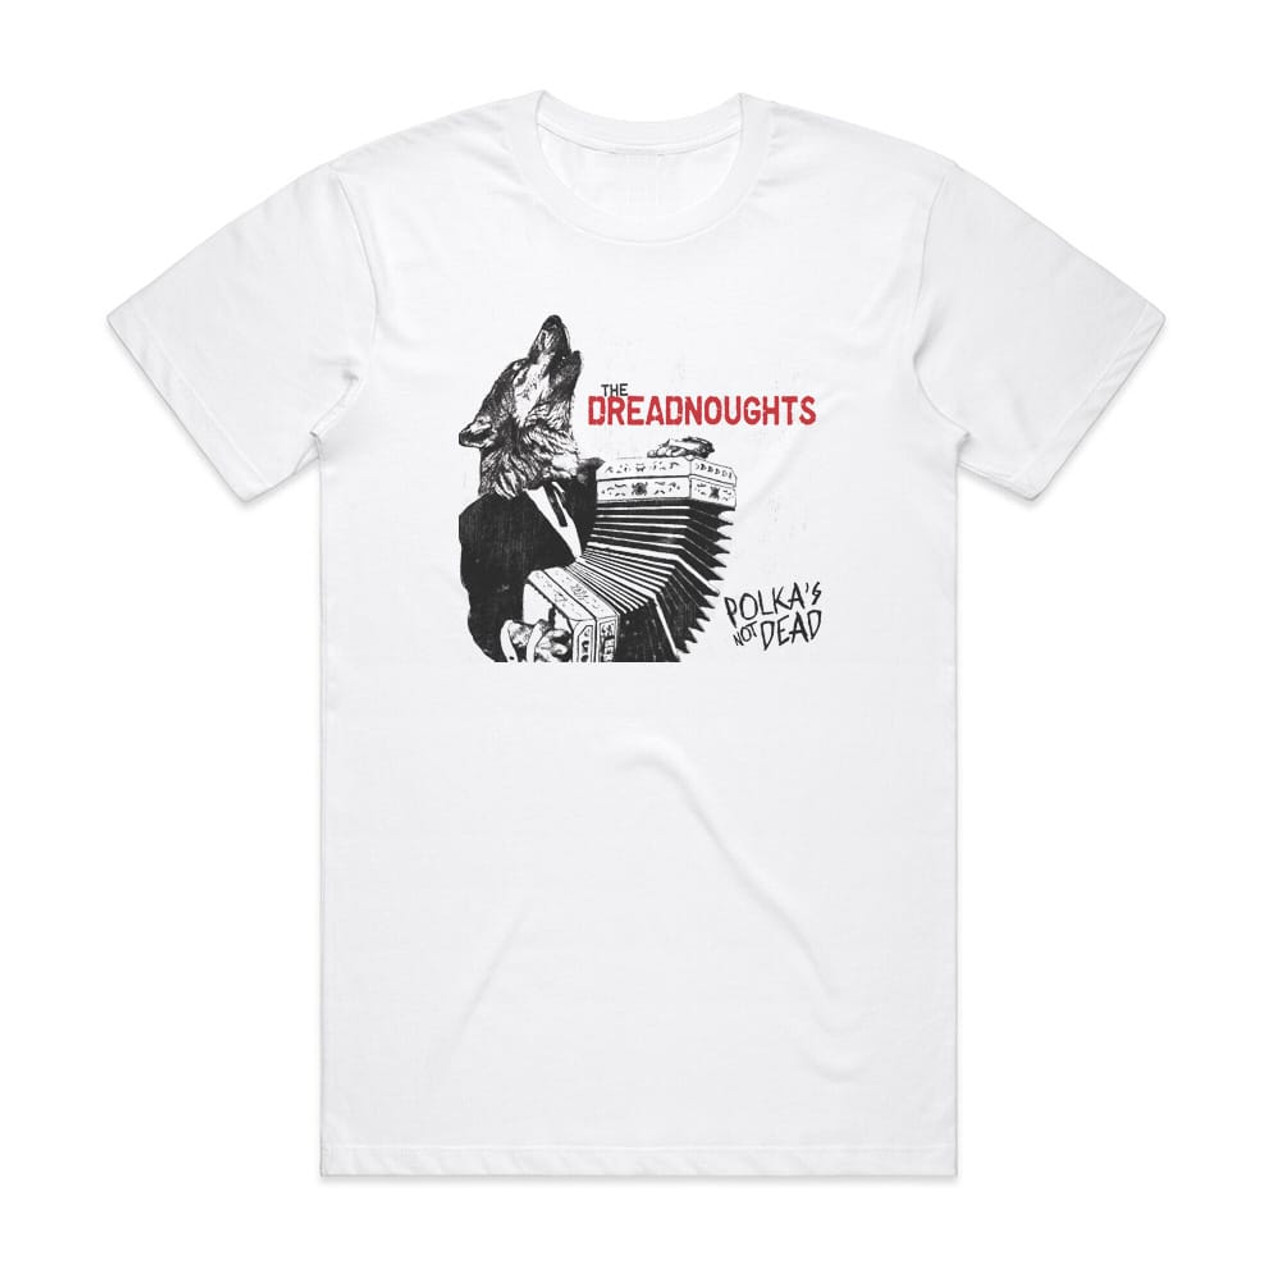 The Dreadnoughts Polkas Not Dead Album Cover T-Shirt White